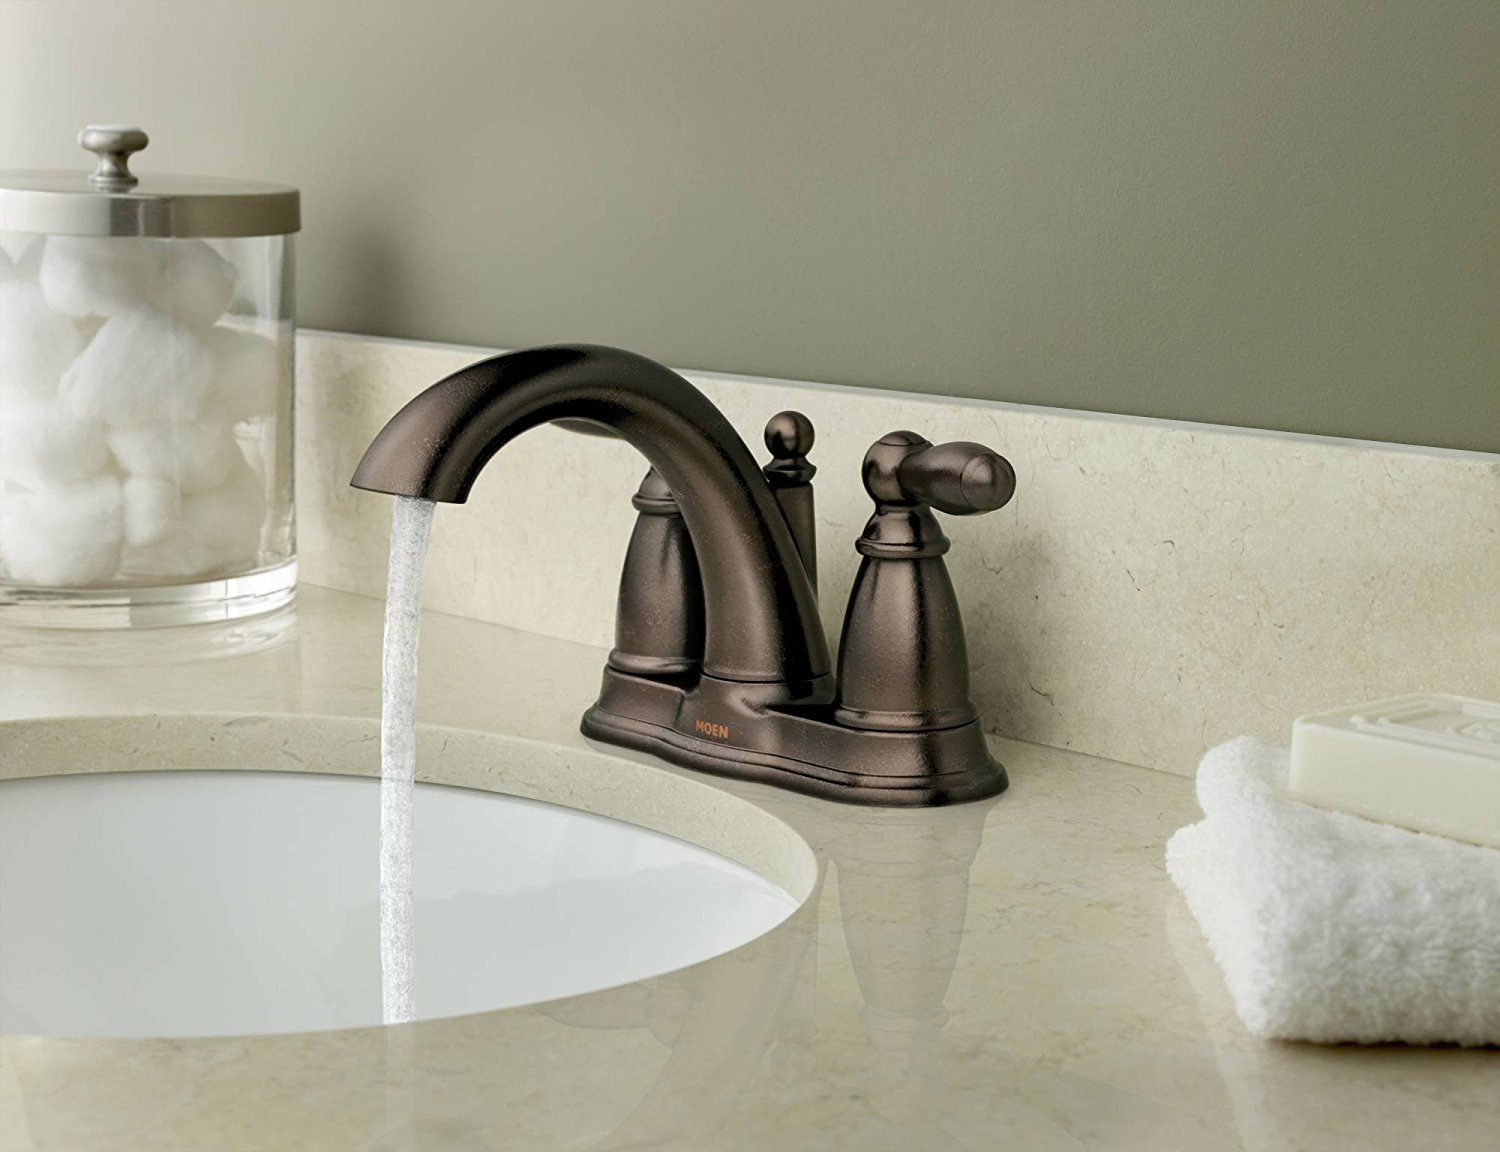 Rona Bathroom Faucet Faucet Ideas Site